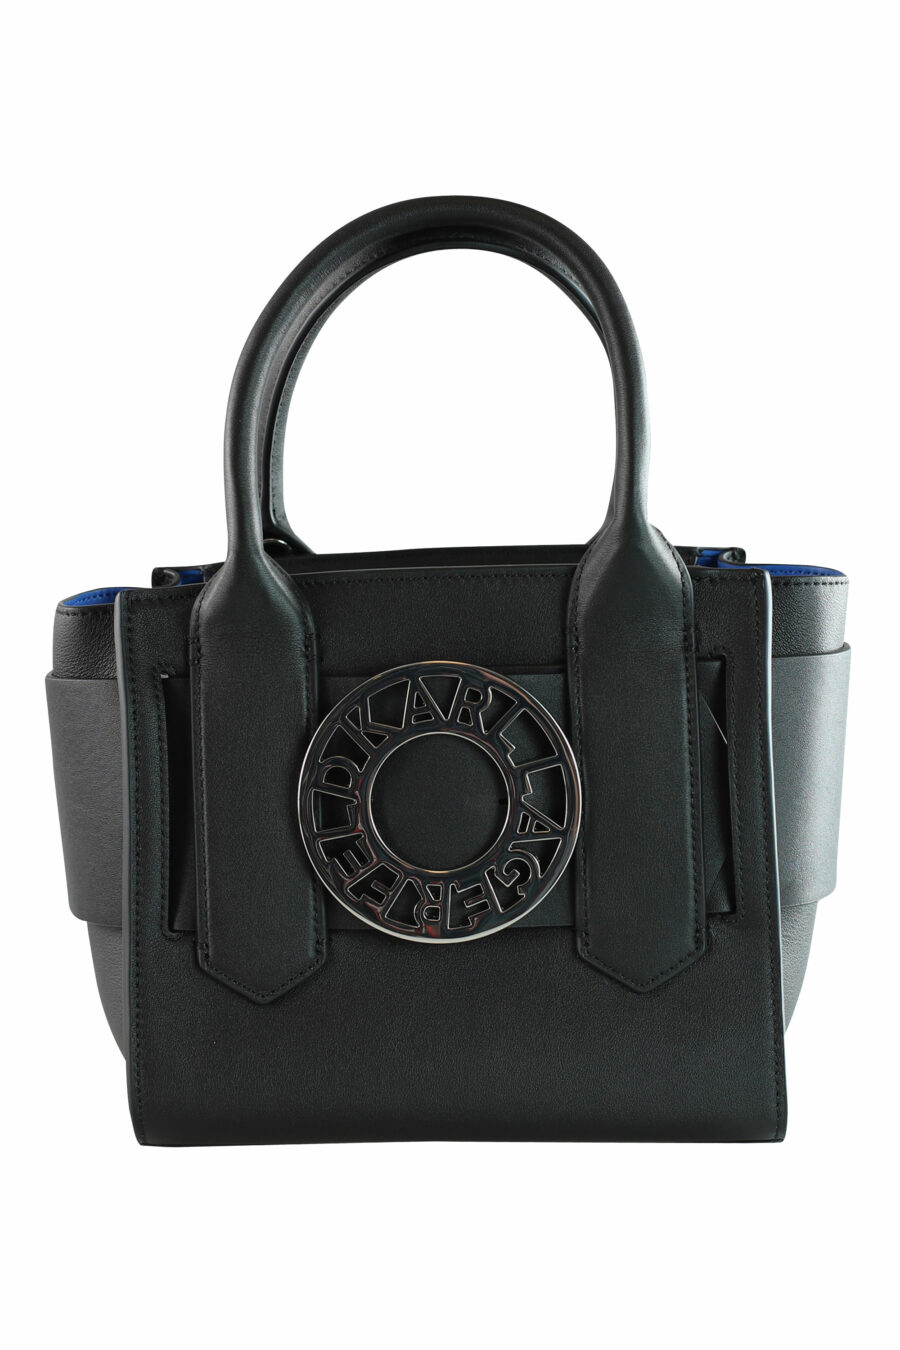 Tote bag mini negro con logo "k/disk" - 8720744103363